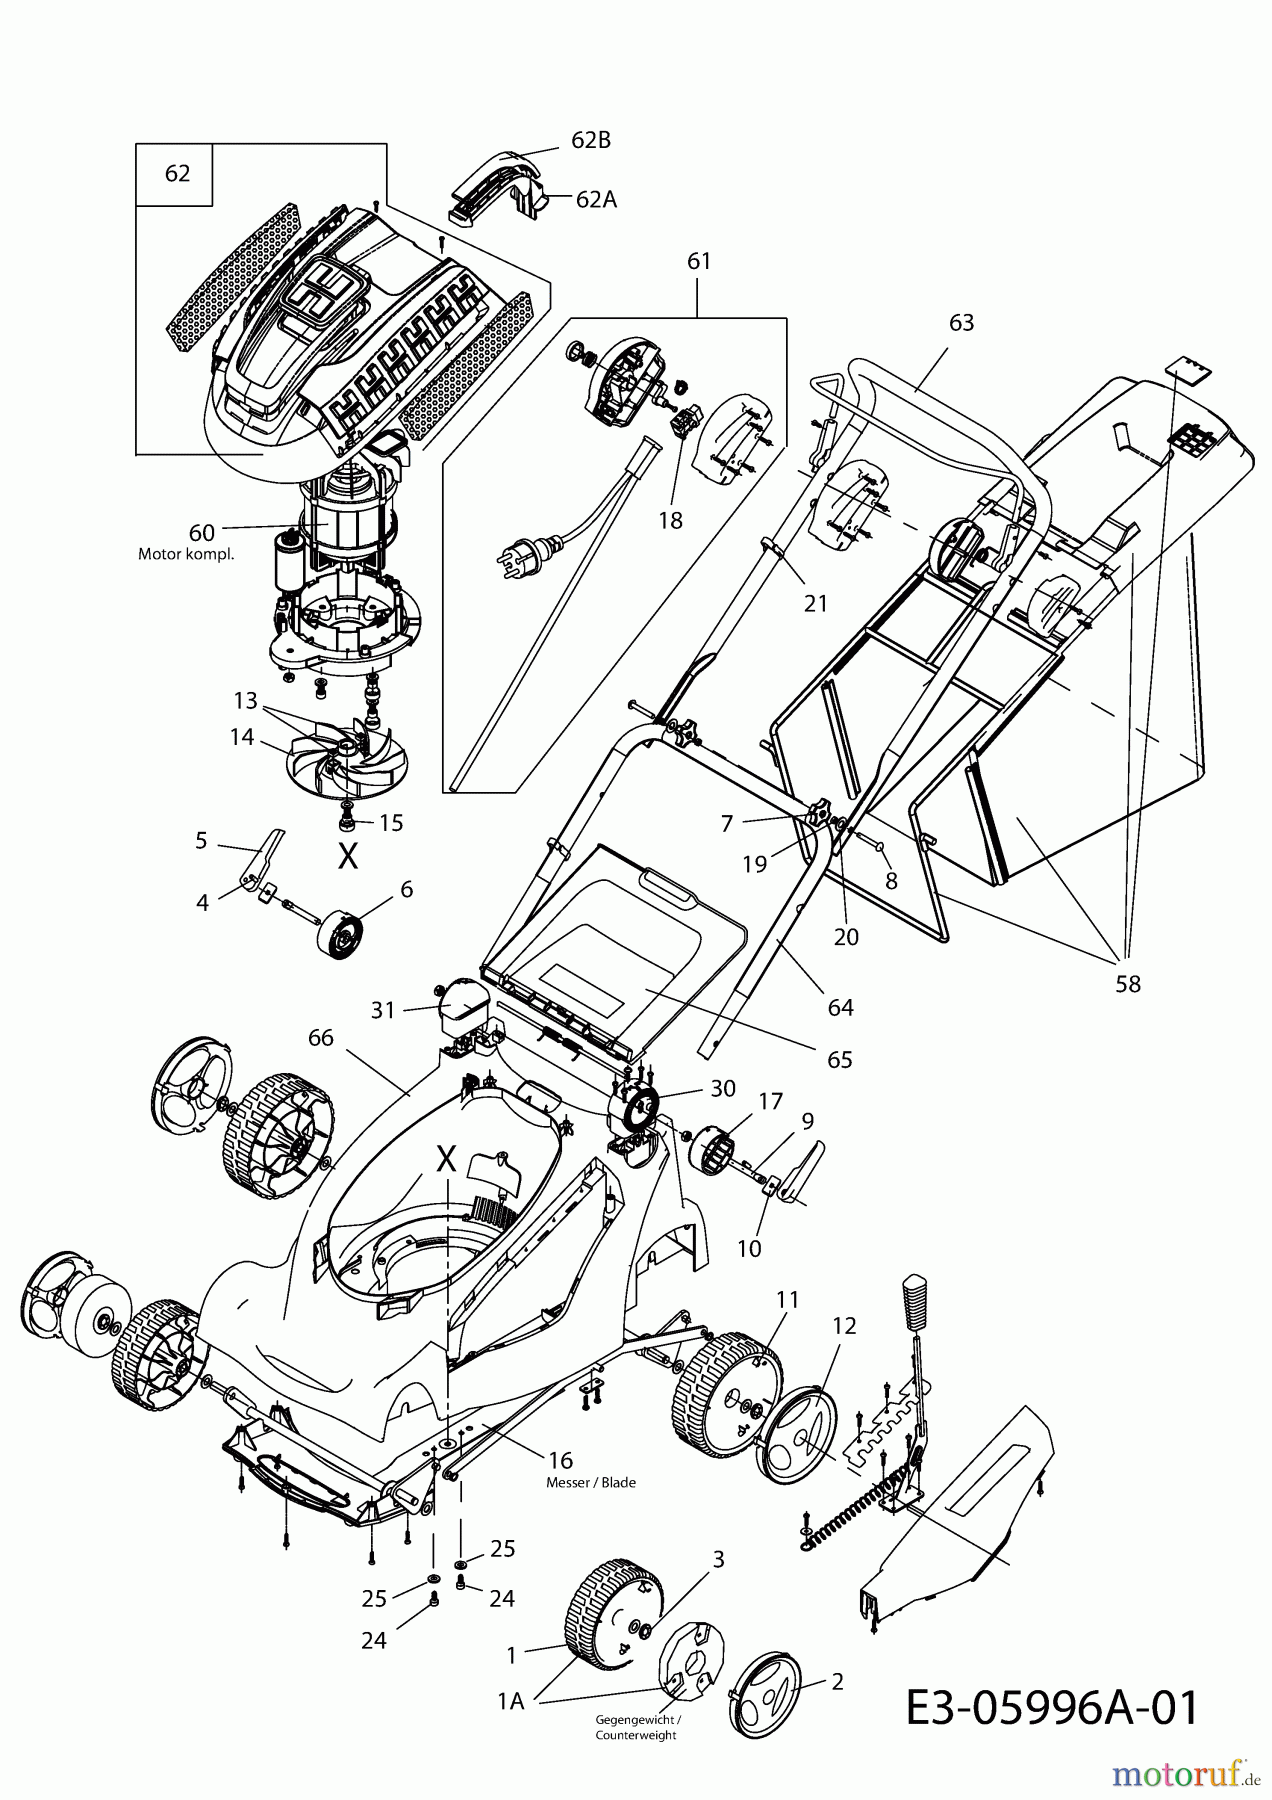  Wingart Electric mower ER 1842-1 18BCE4L2601  (2016) Basic machine